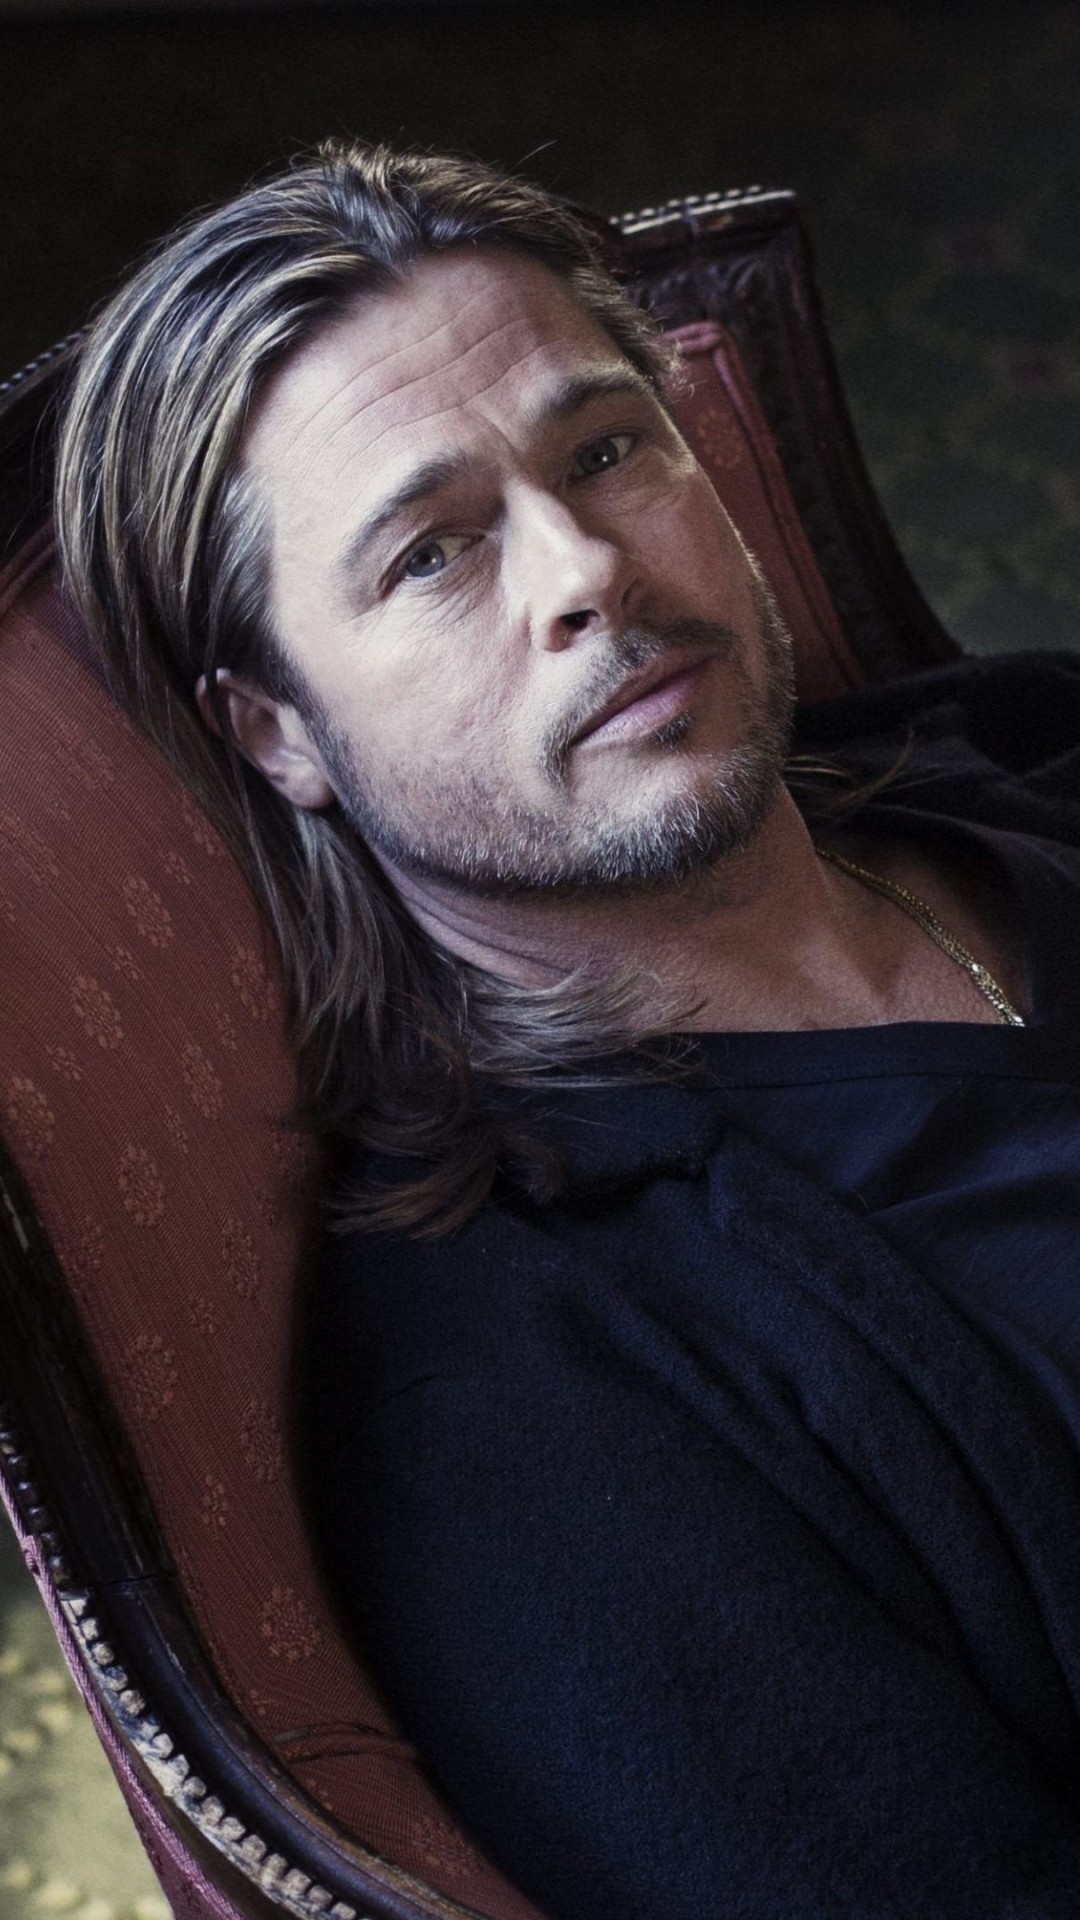 Brad Pitt Sitting On Chair Wallpaper for HTC One